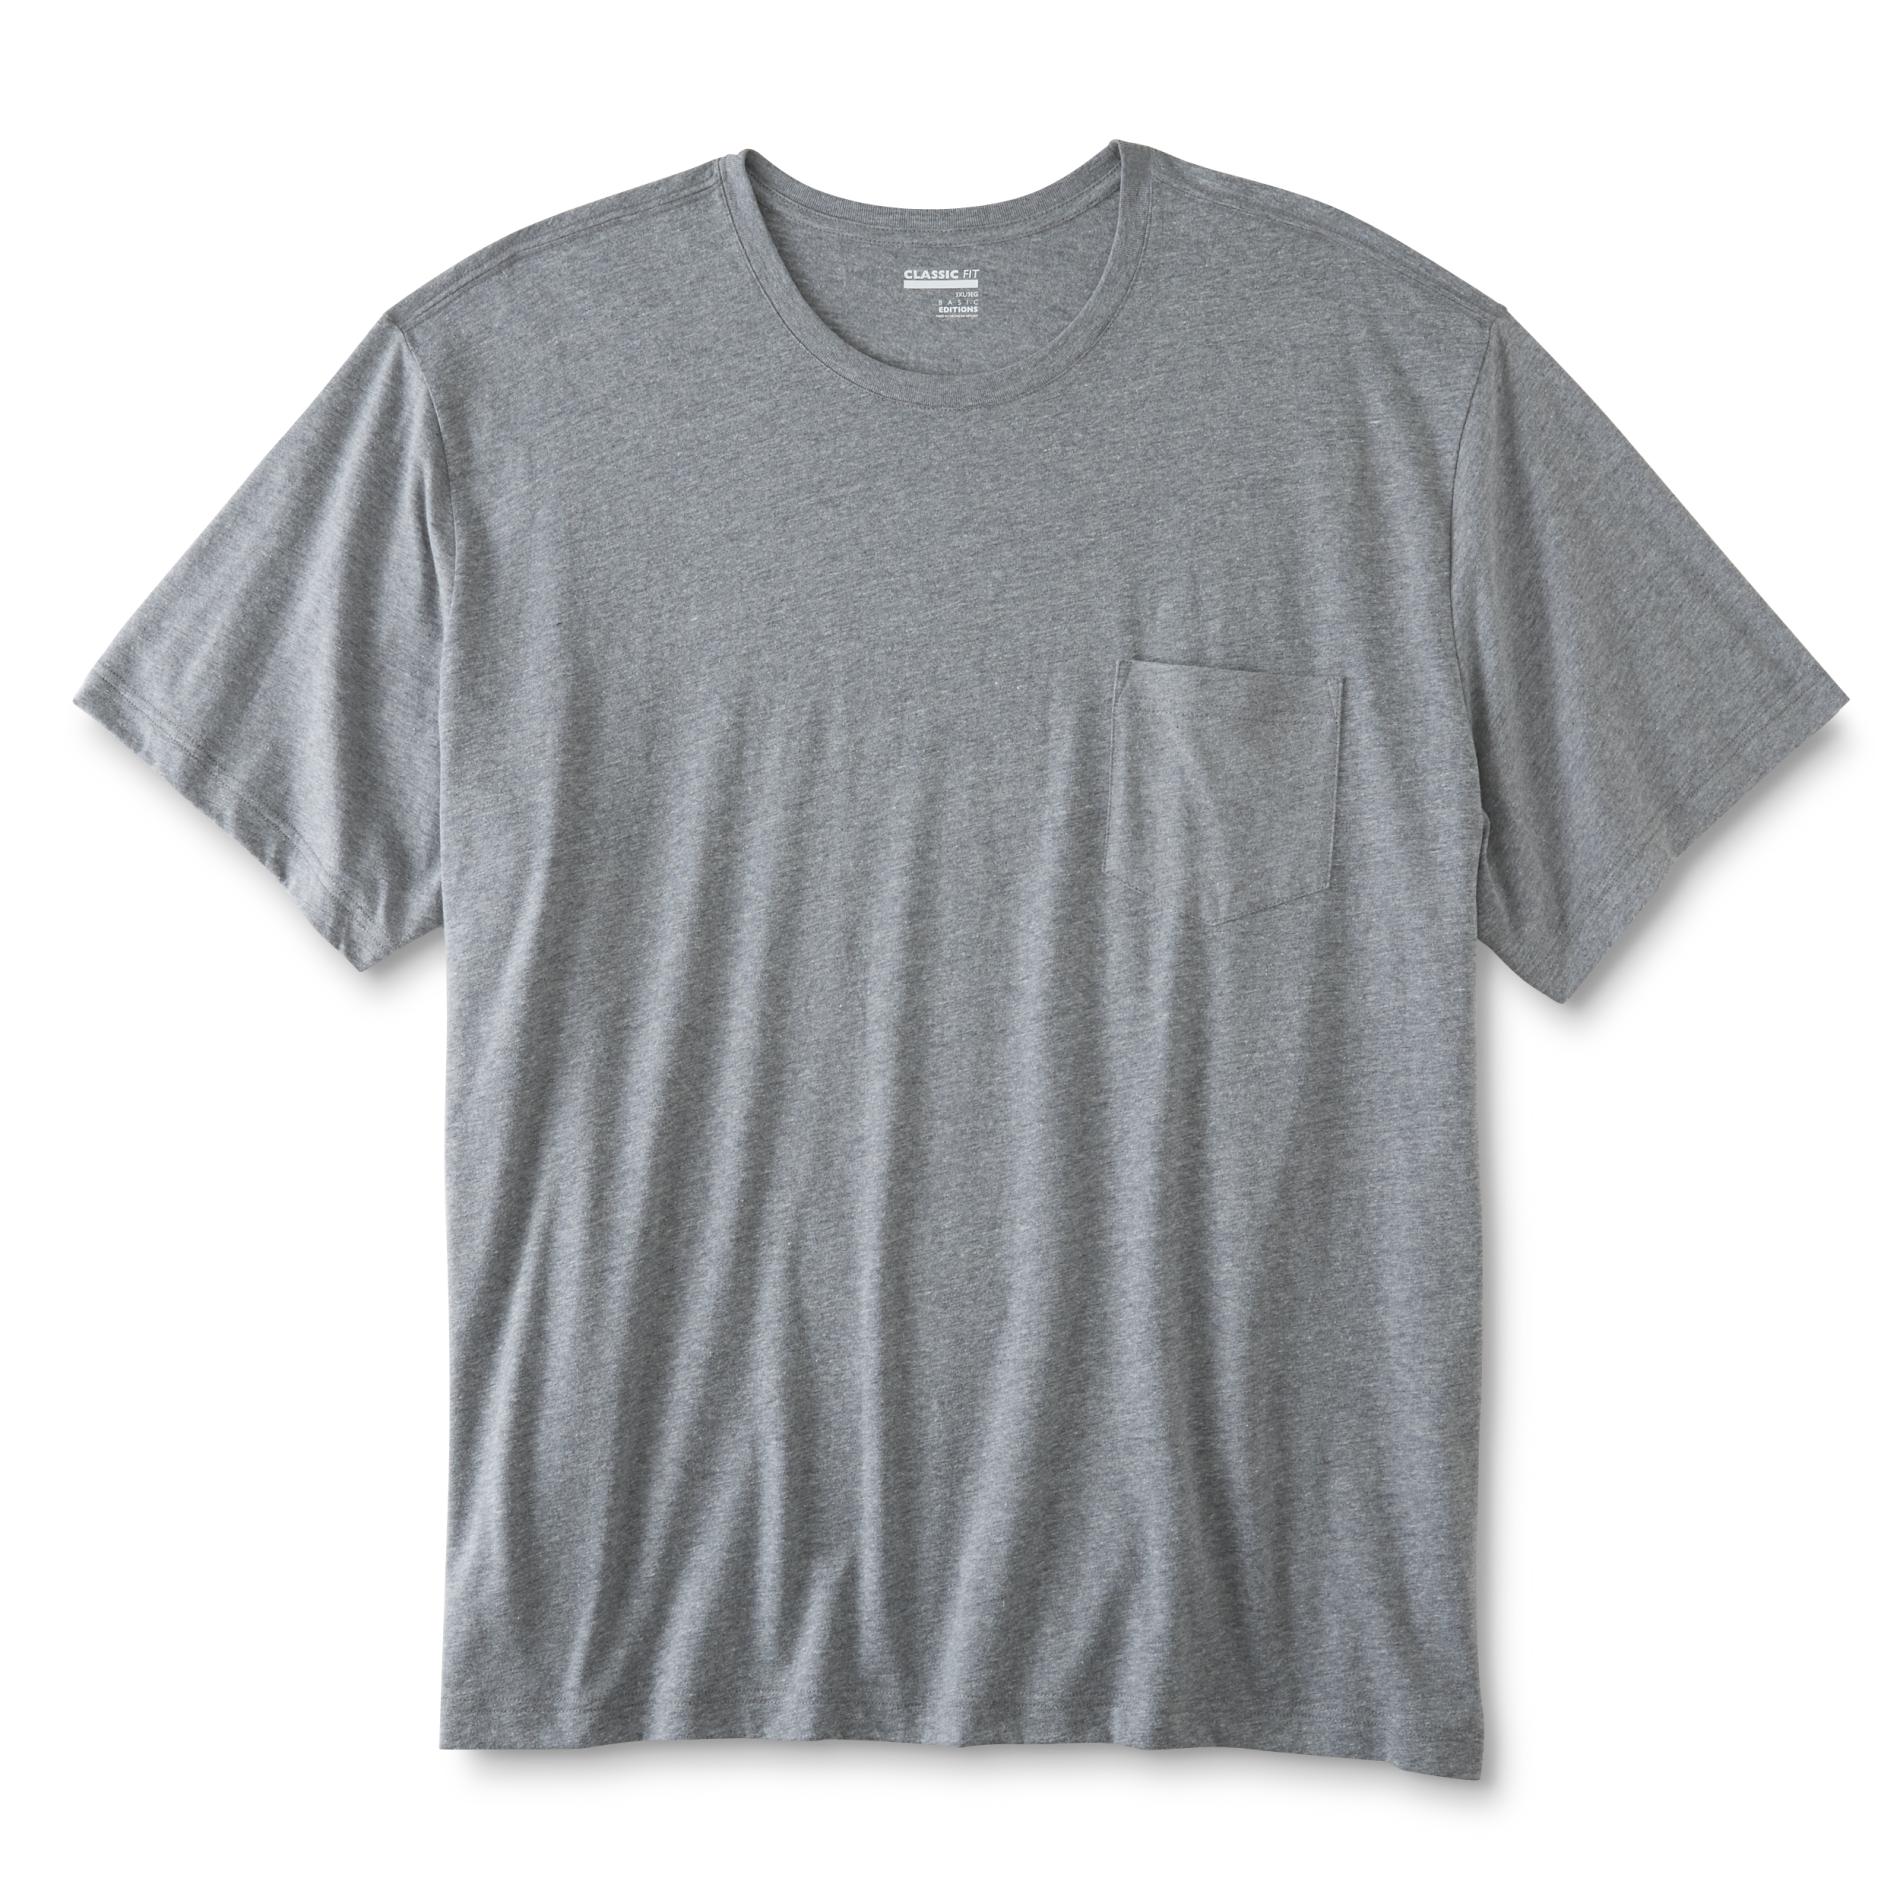 Basic Editions Men's Big & Tall Classic Fit T-Shirt